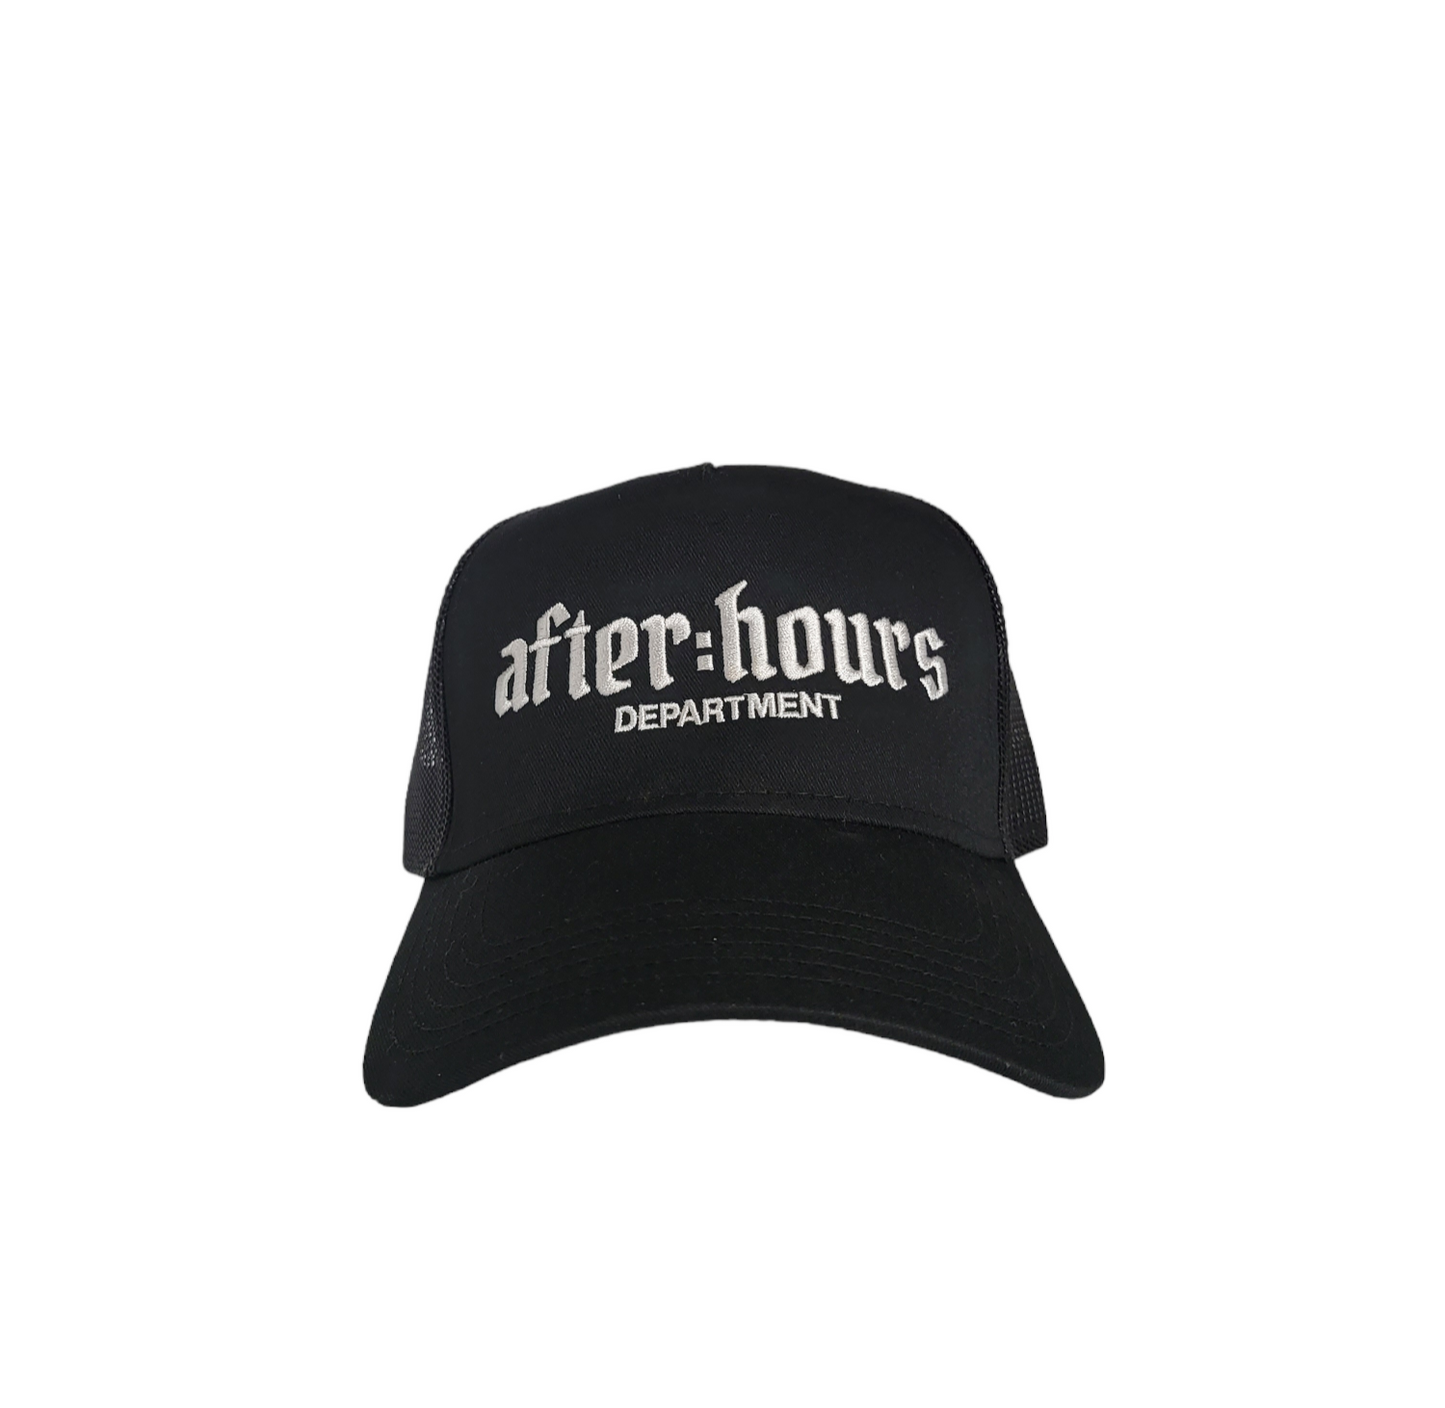 "AFTER:HOURS DEPTARTMENT" Trucker Hat